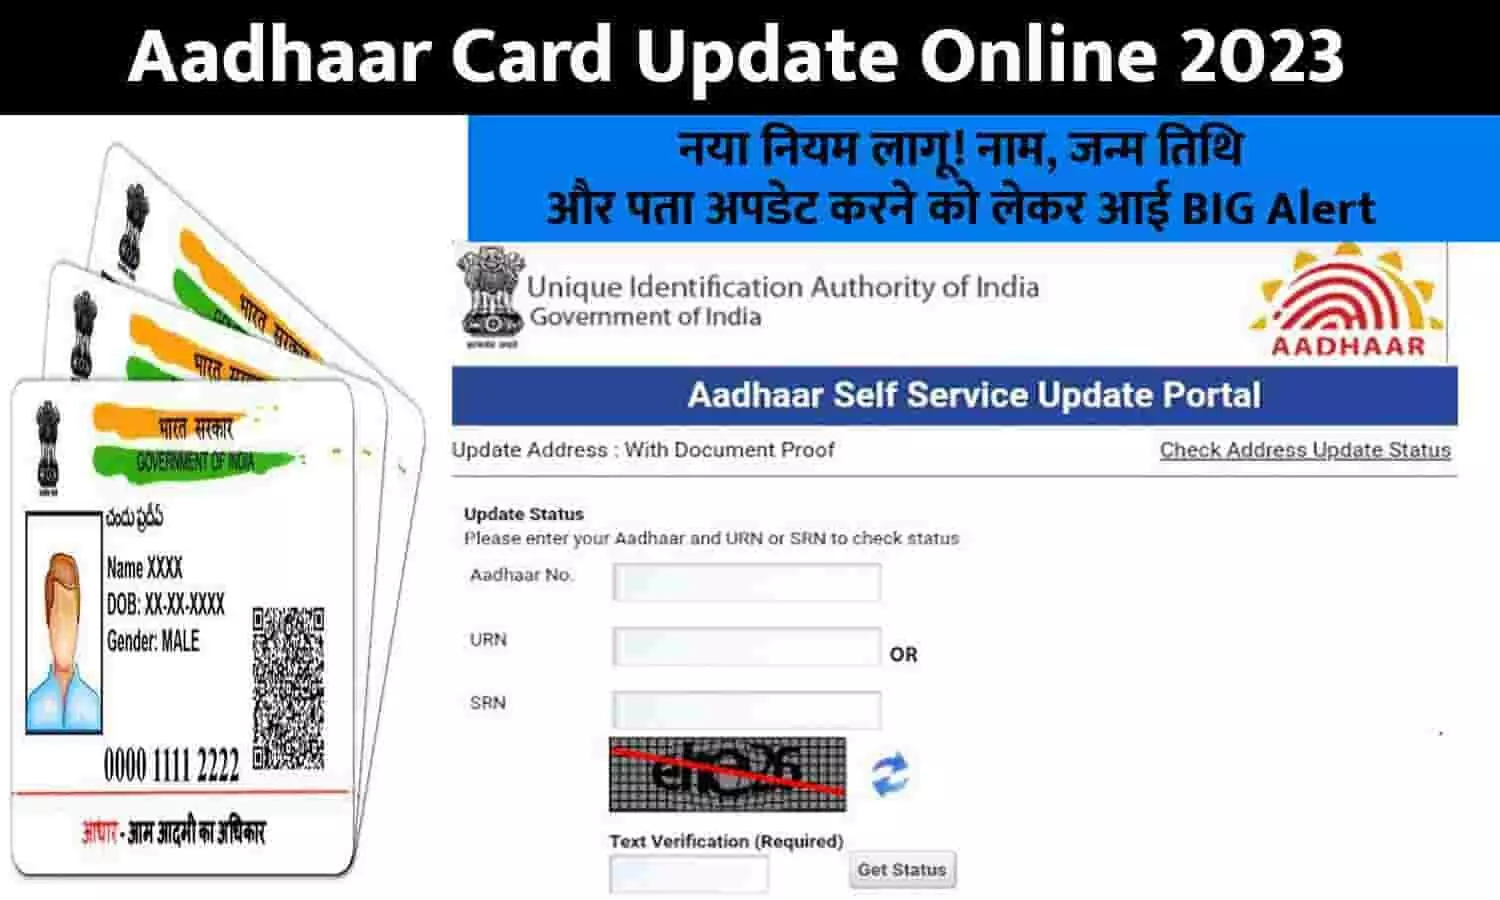 Aadhaar Card Update Online 2023: नया नियम लागू! नाम, जन्म तिथि और पता अपडेट करने को लेकर आई BIG Alert